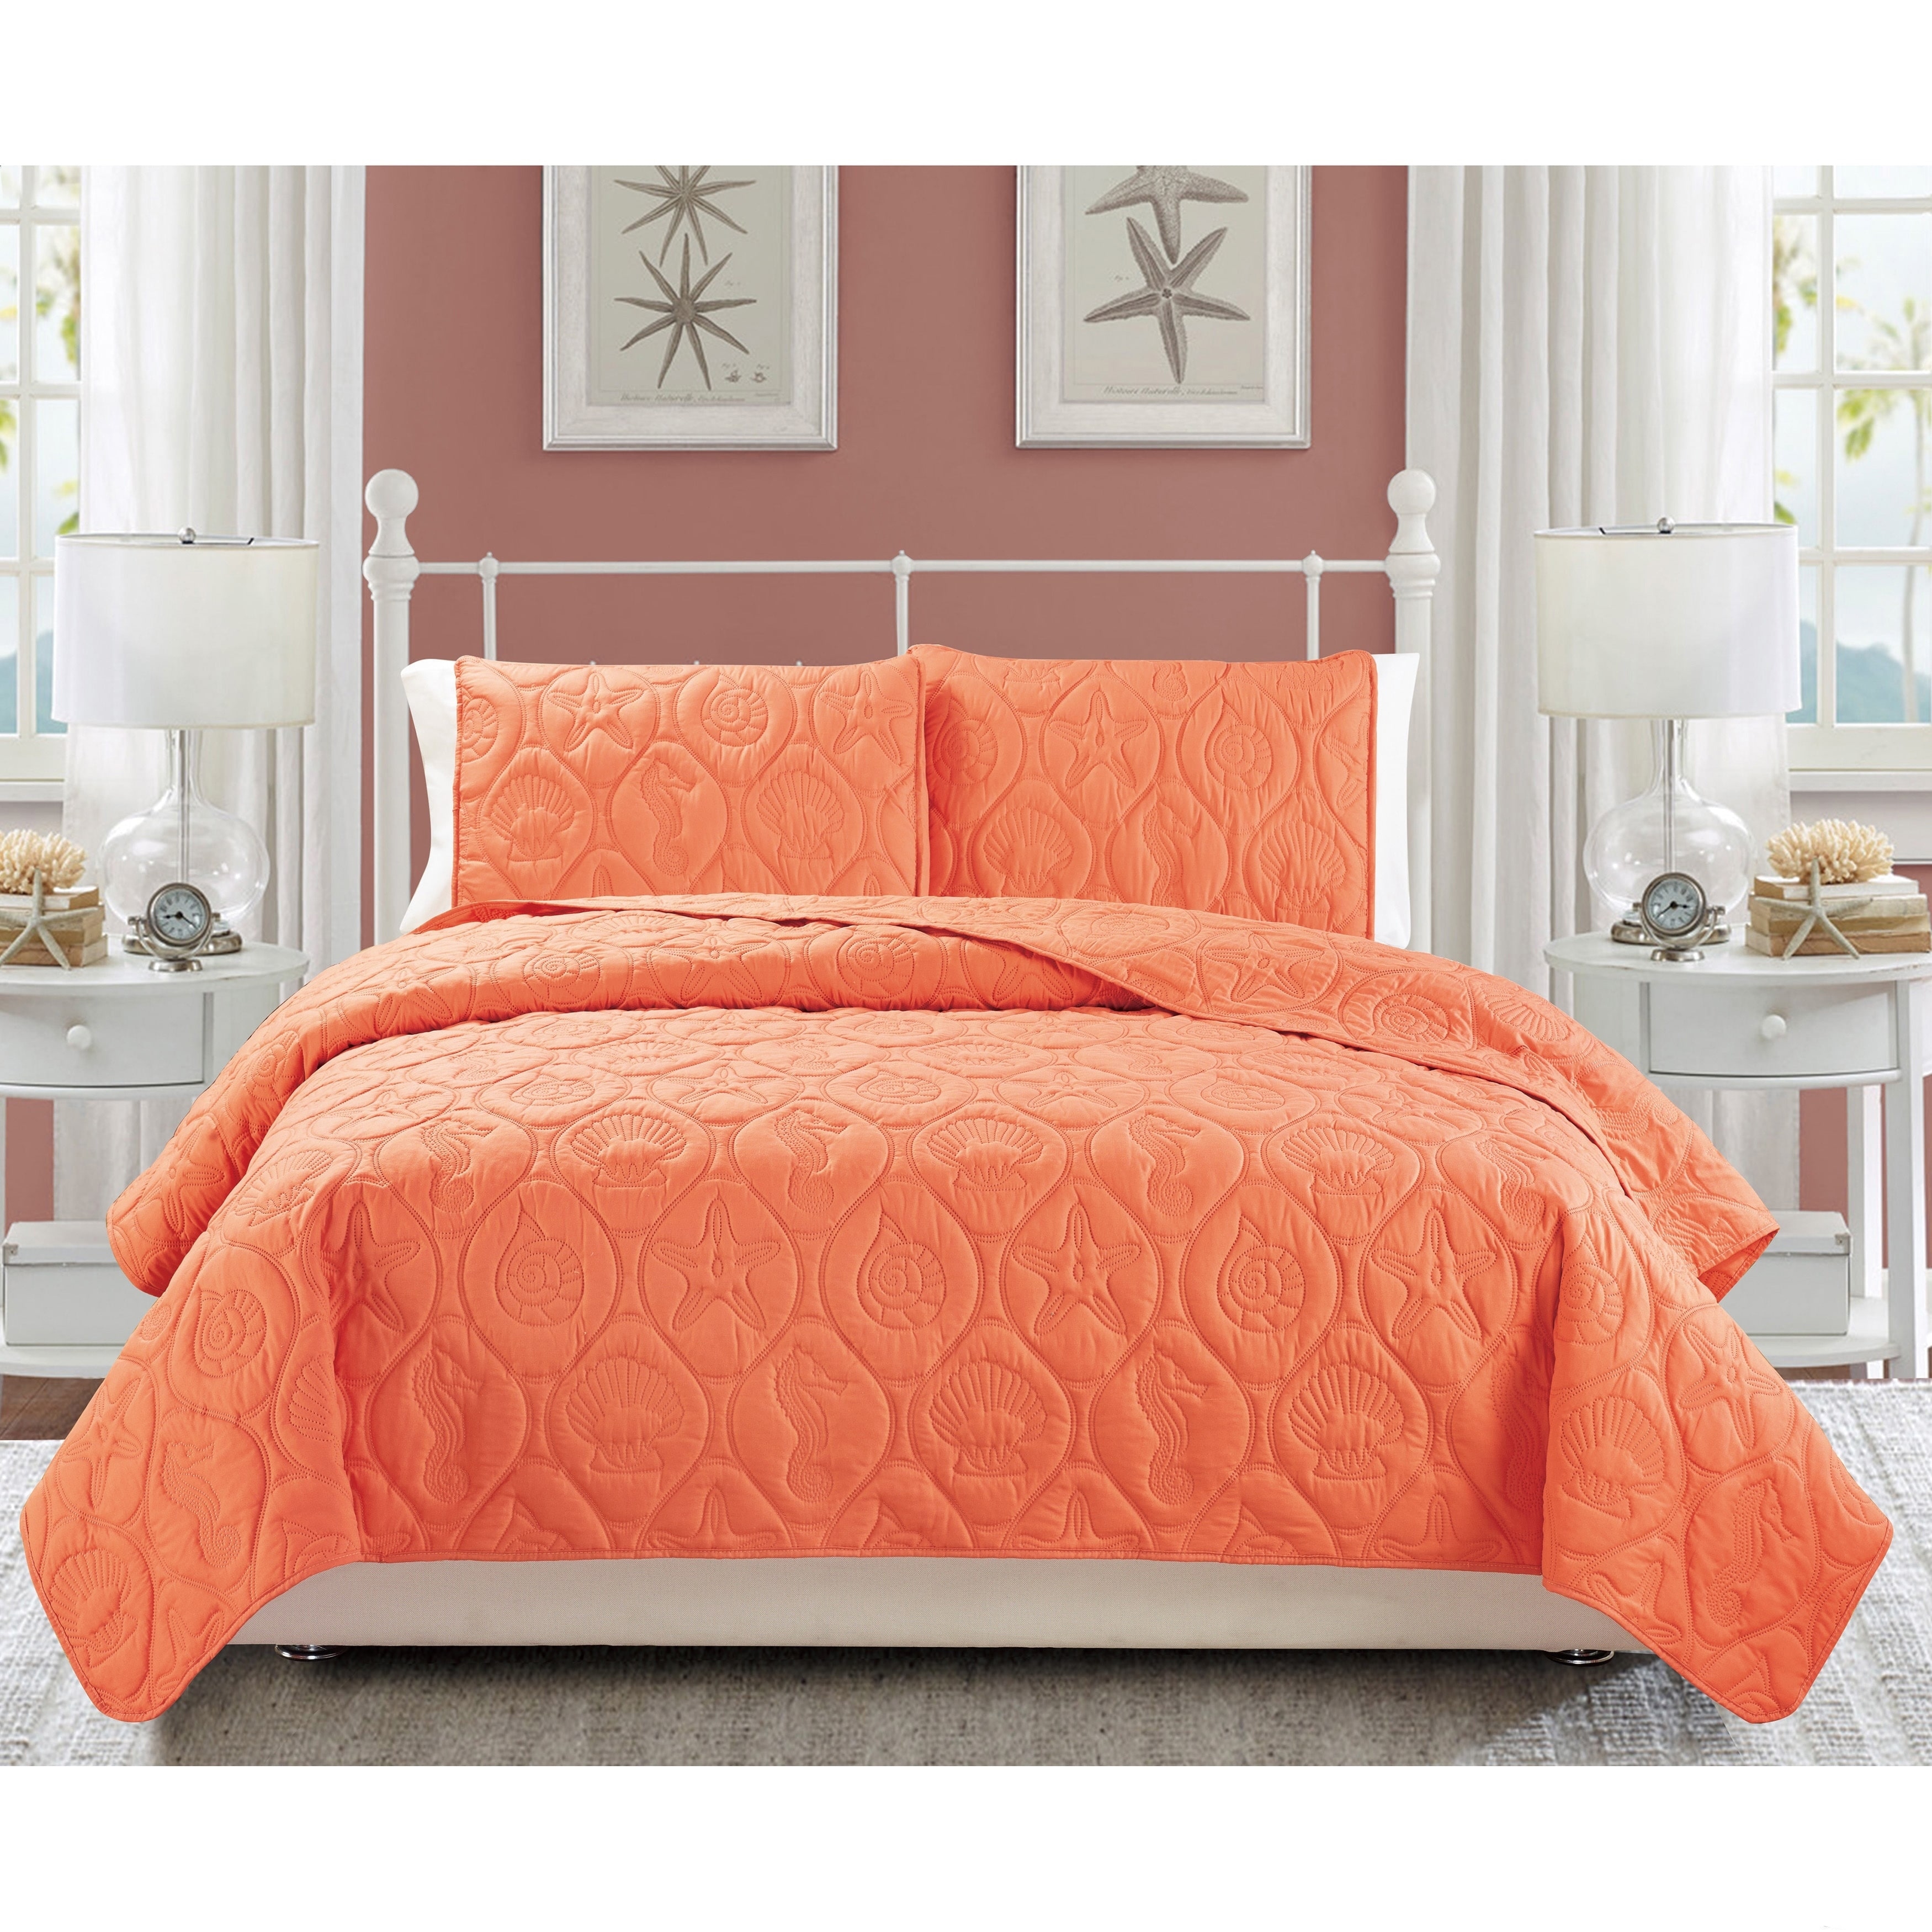 Shop Everrouge Oversized Coral 3 Piece Bedspread Set Overstock